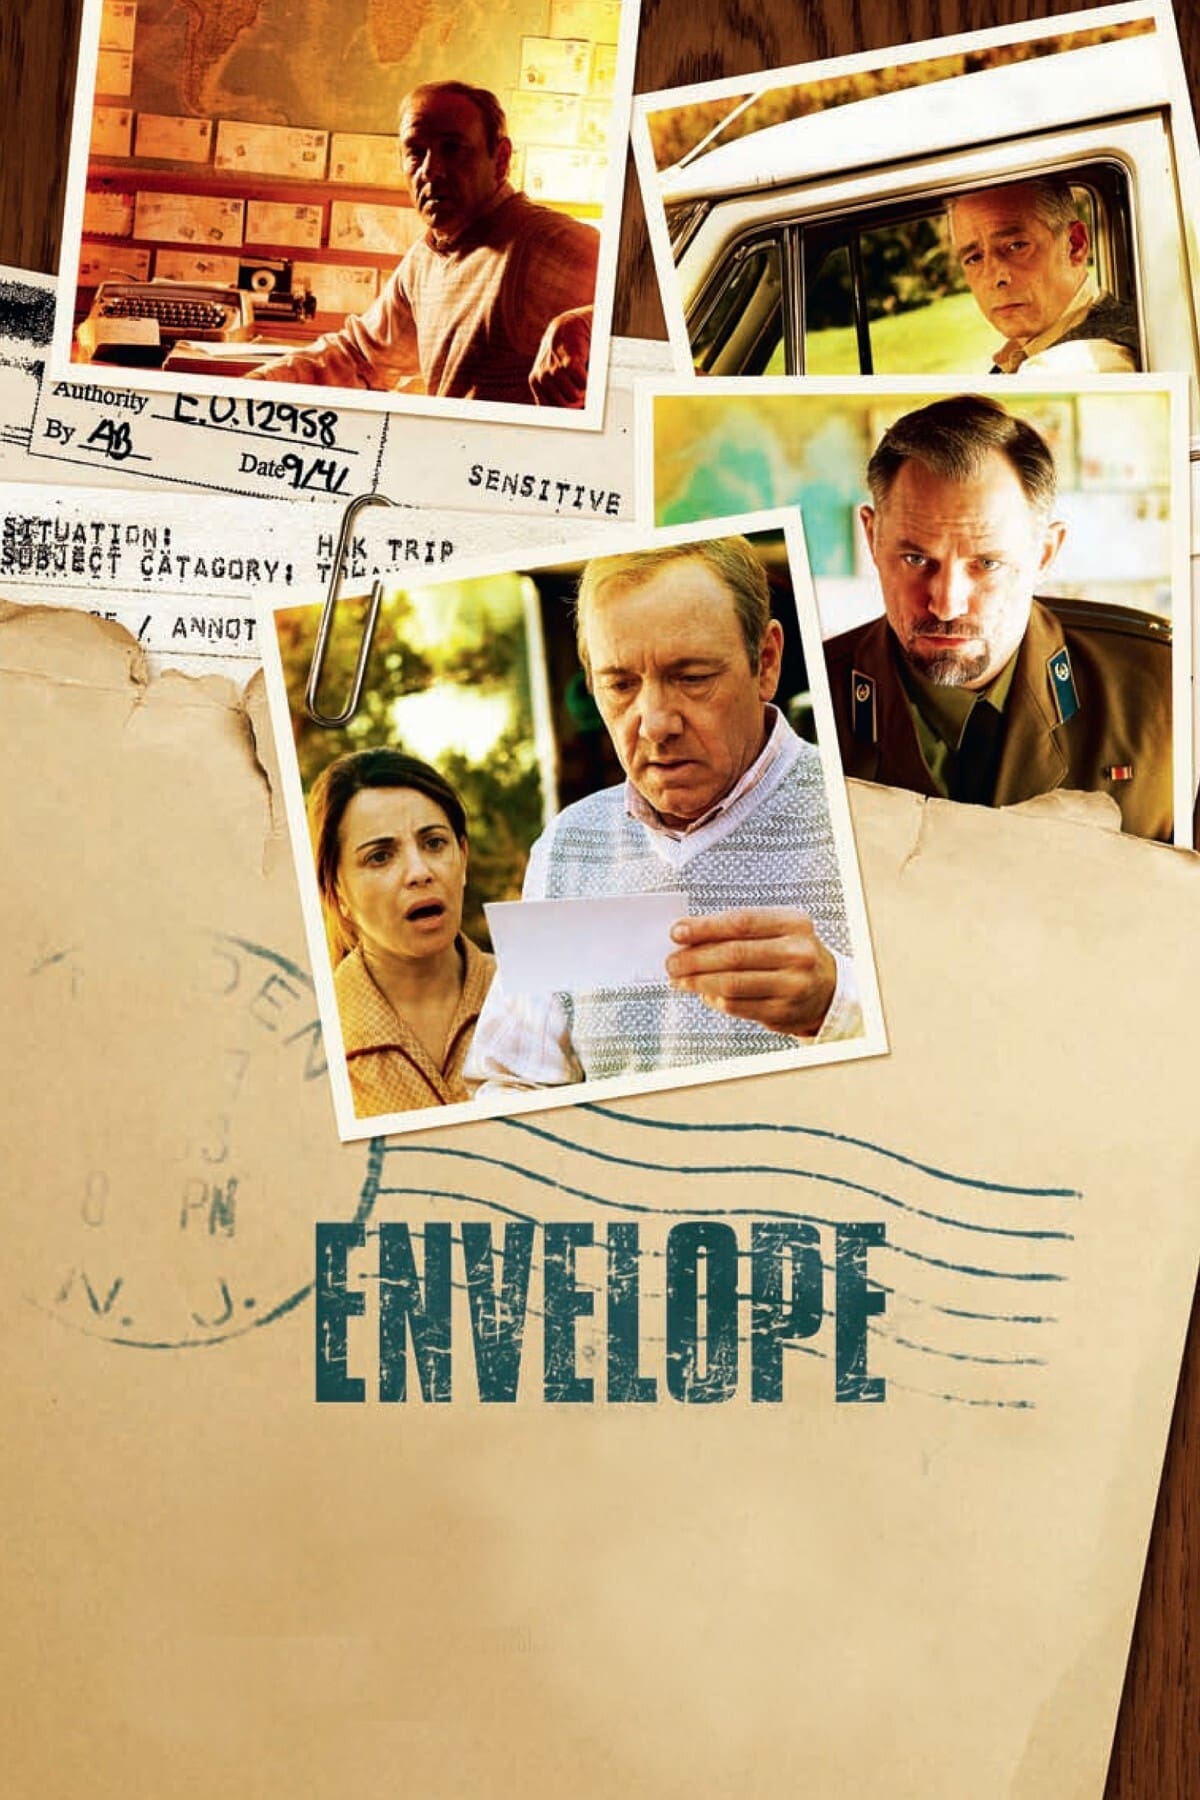 Envelope (2012)